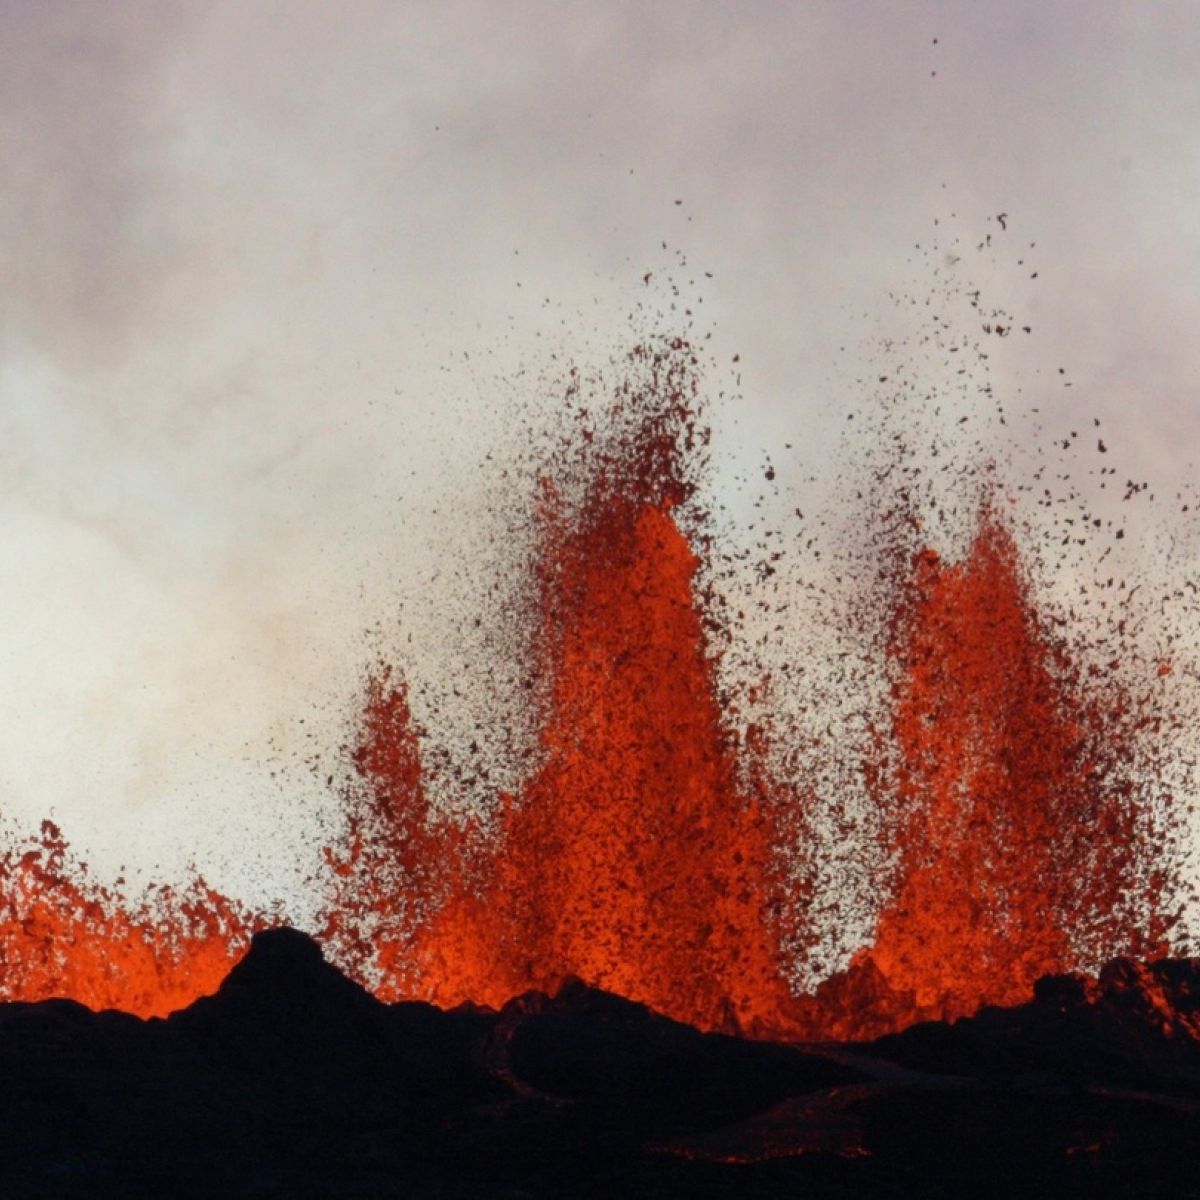 hypothesis of volcano